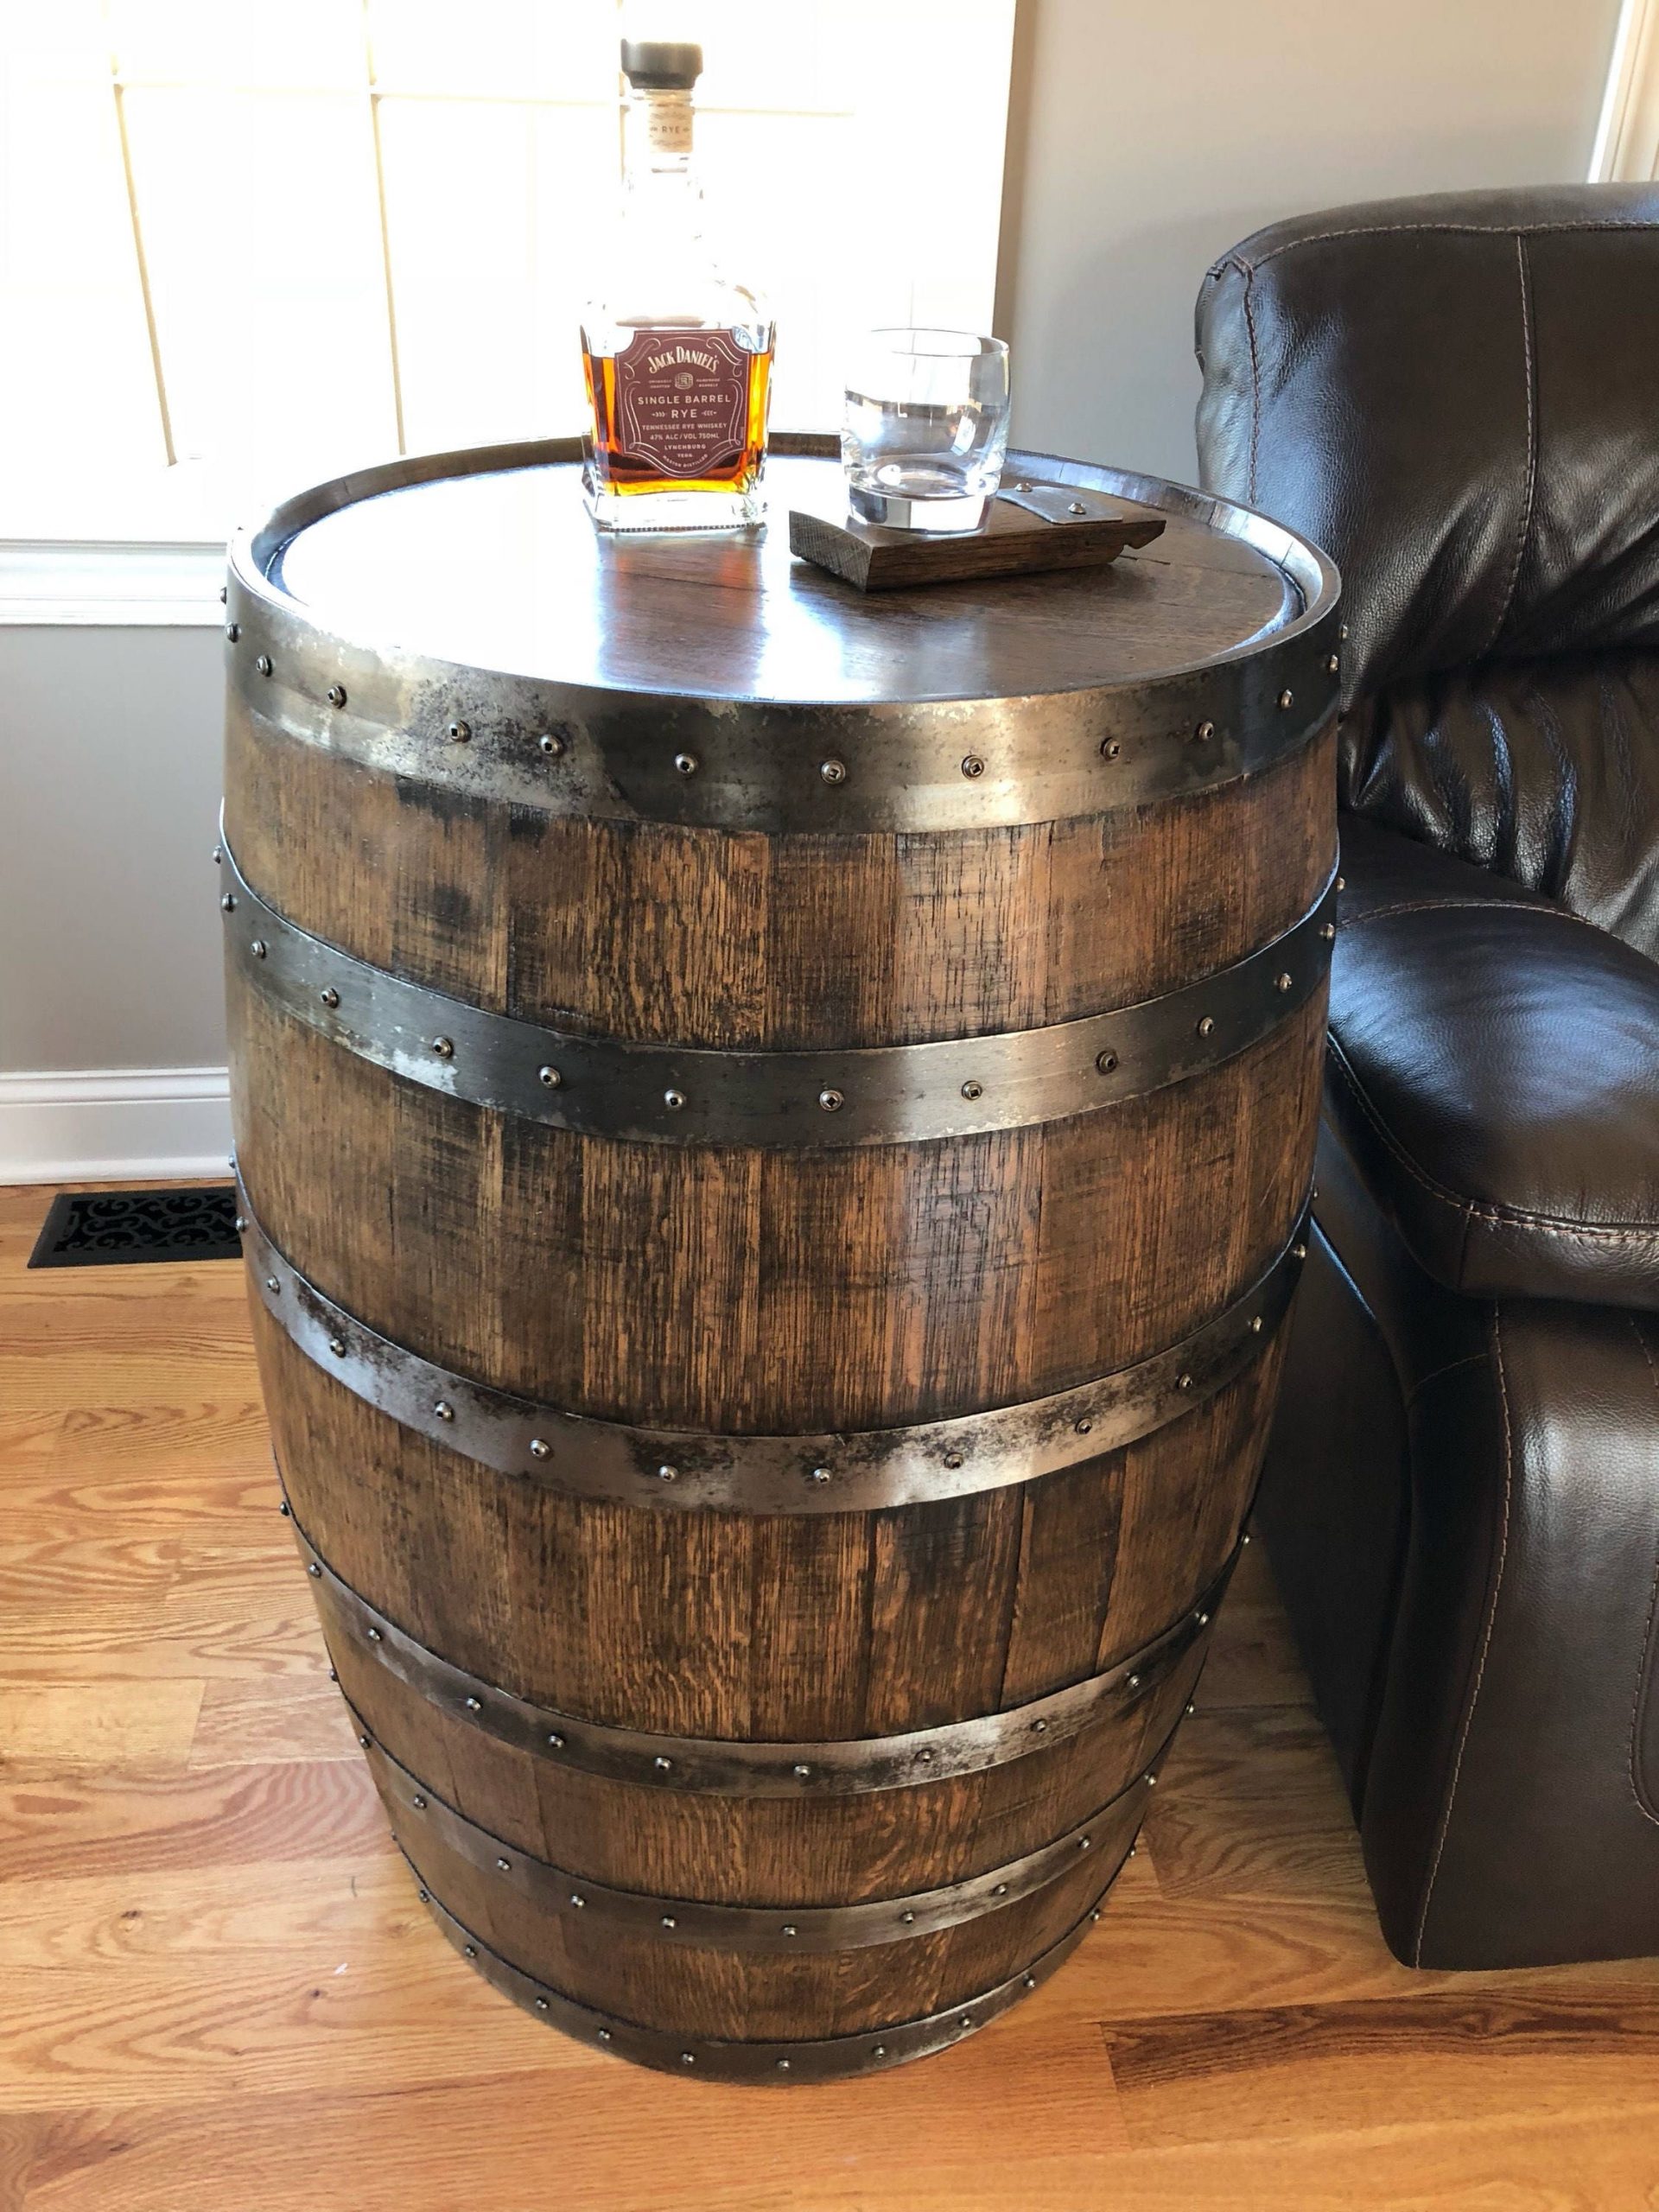 Authentic Whiskey Barrel